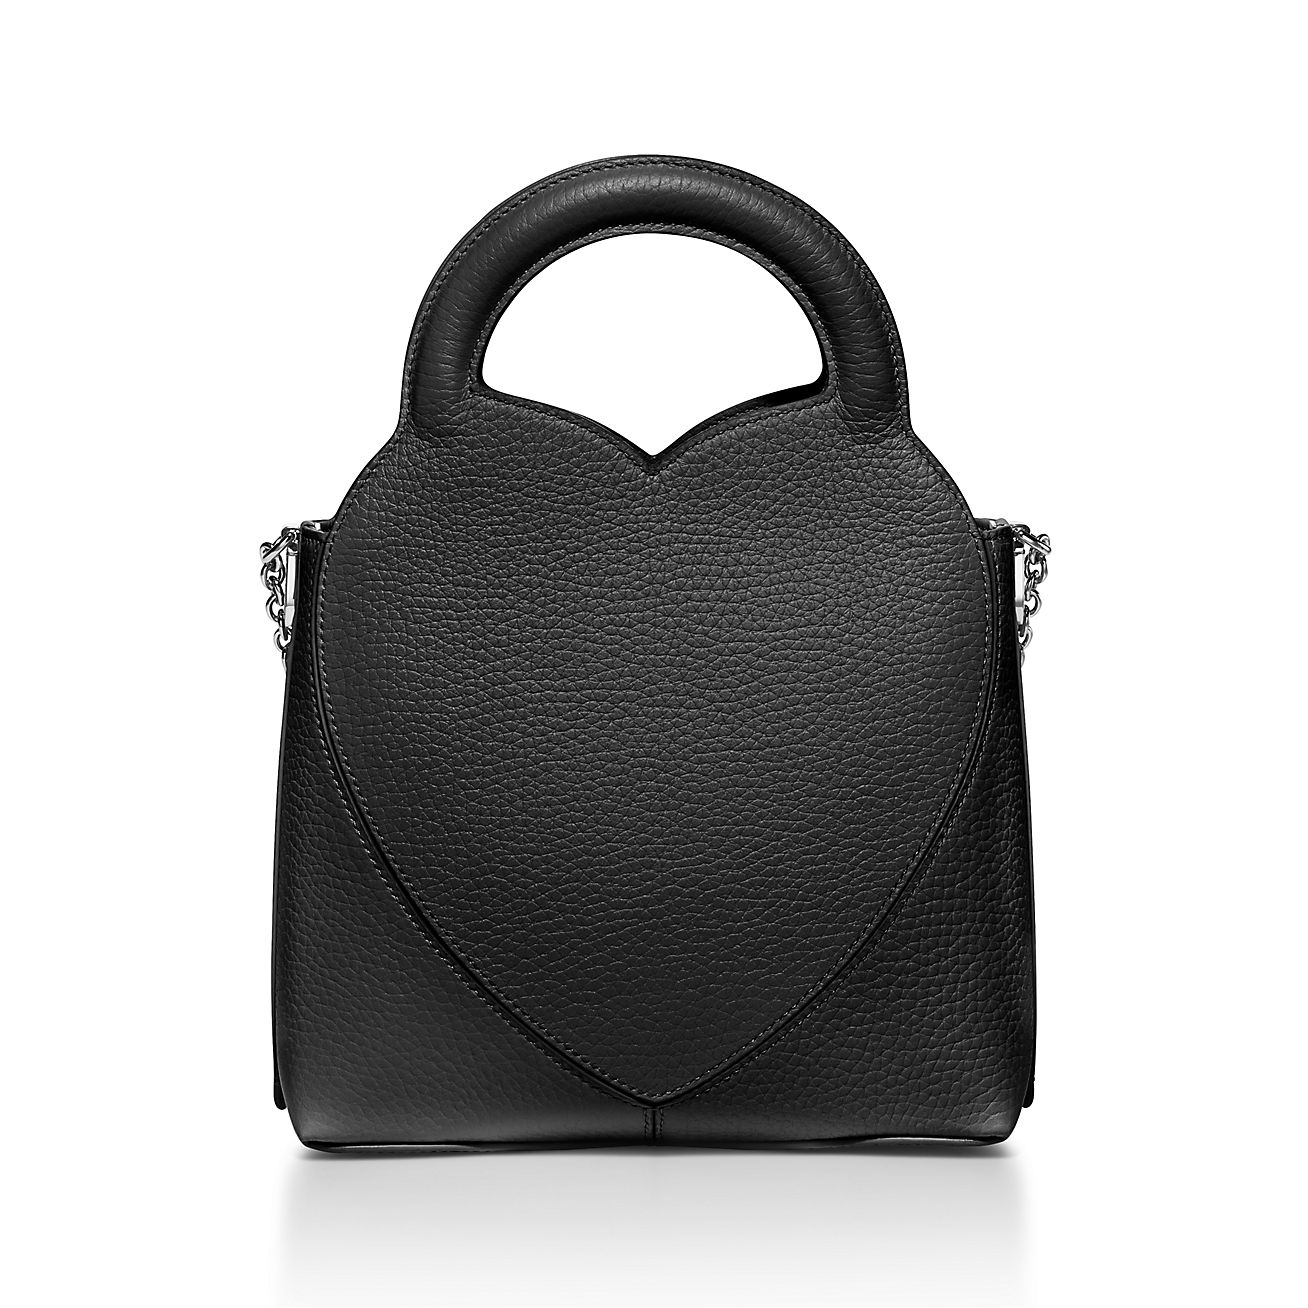 Return to Tiffany® Mini Tote Bag in Black Leather | Tiffany & Co.